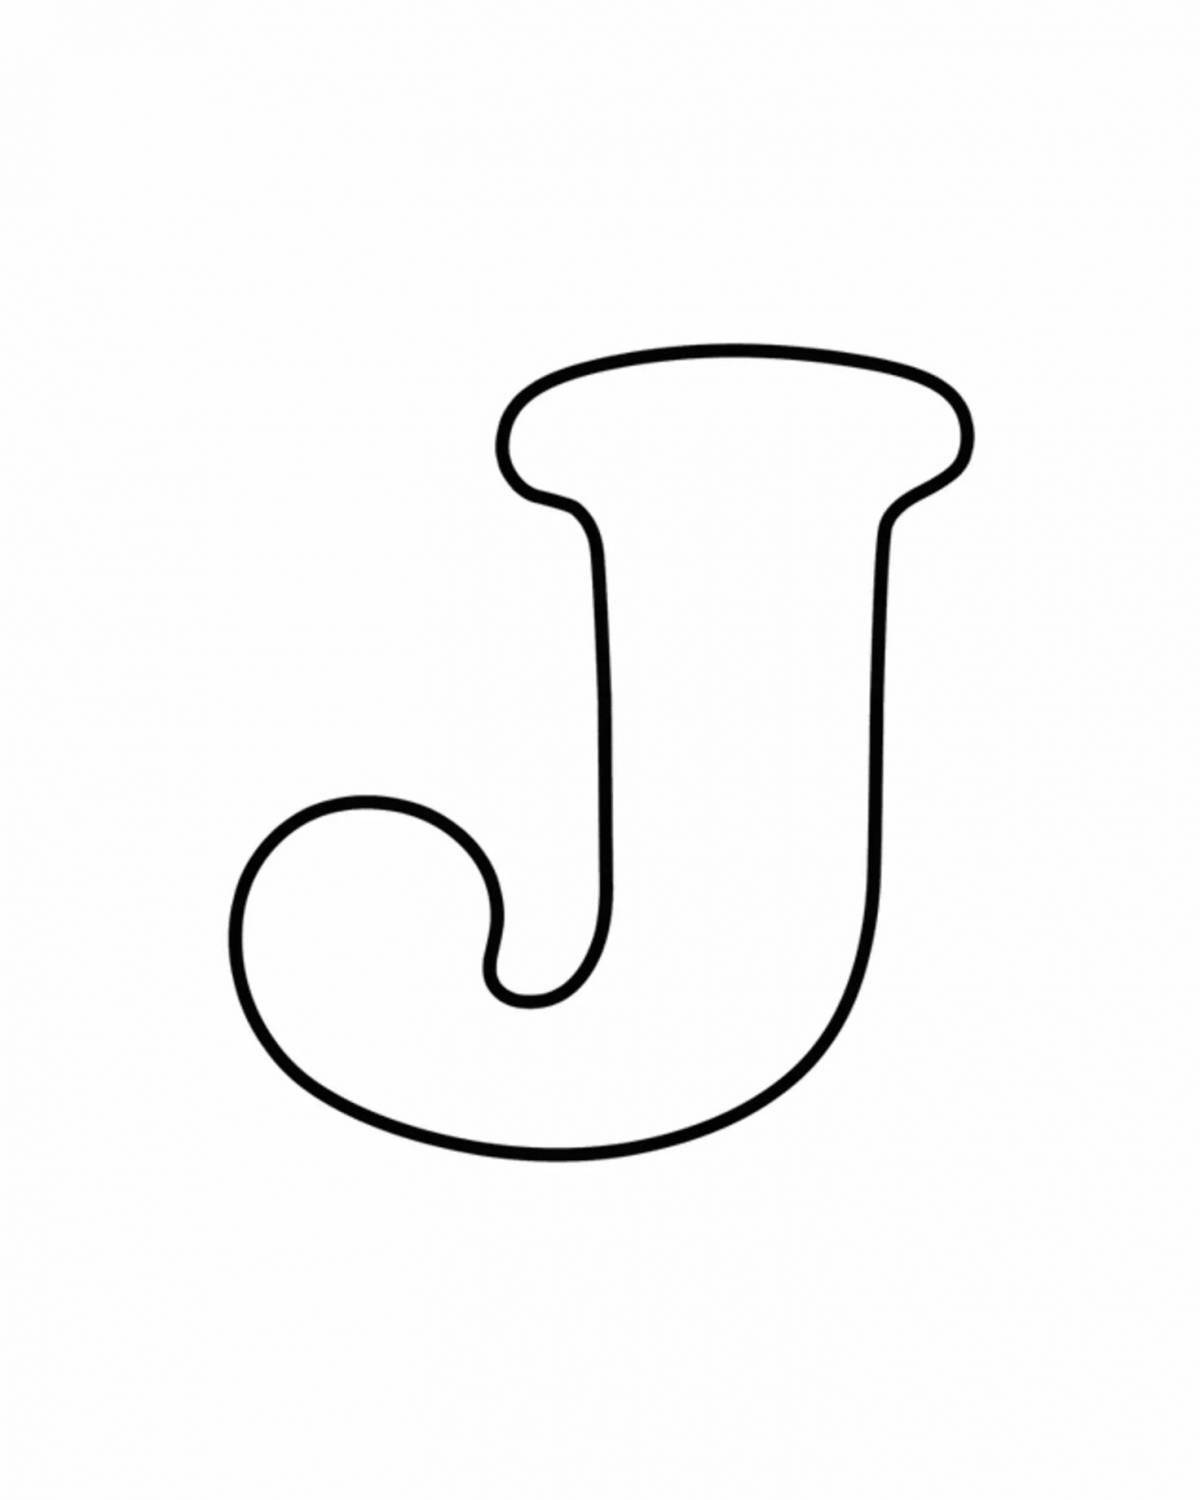 Захватывающая раскраска с буквой j